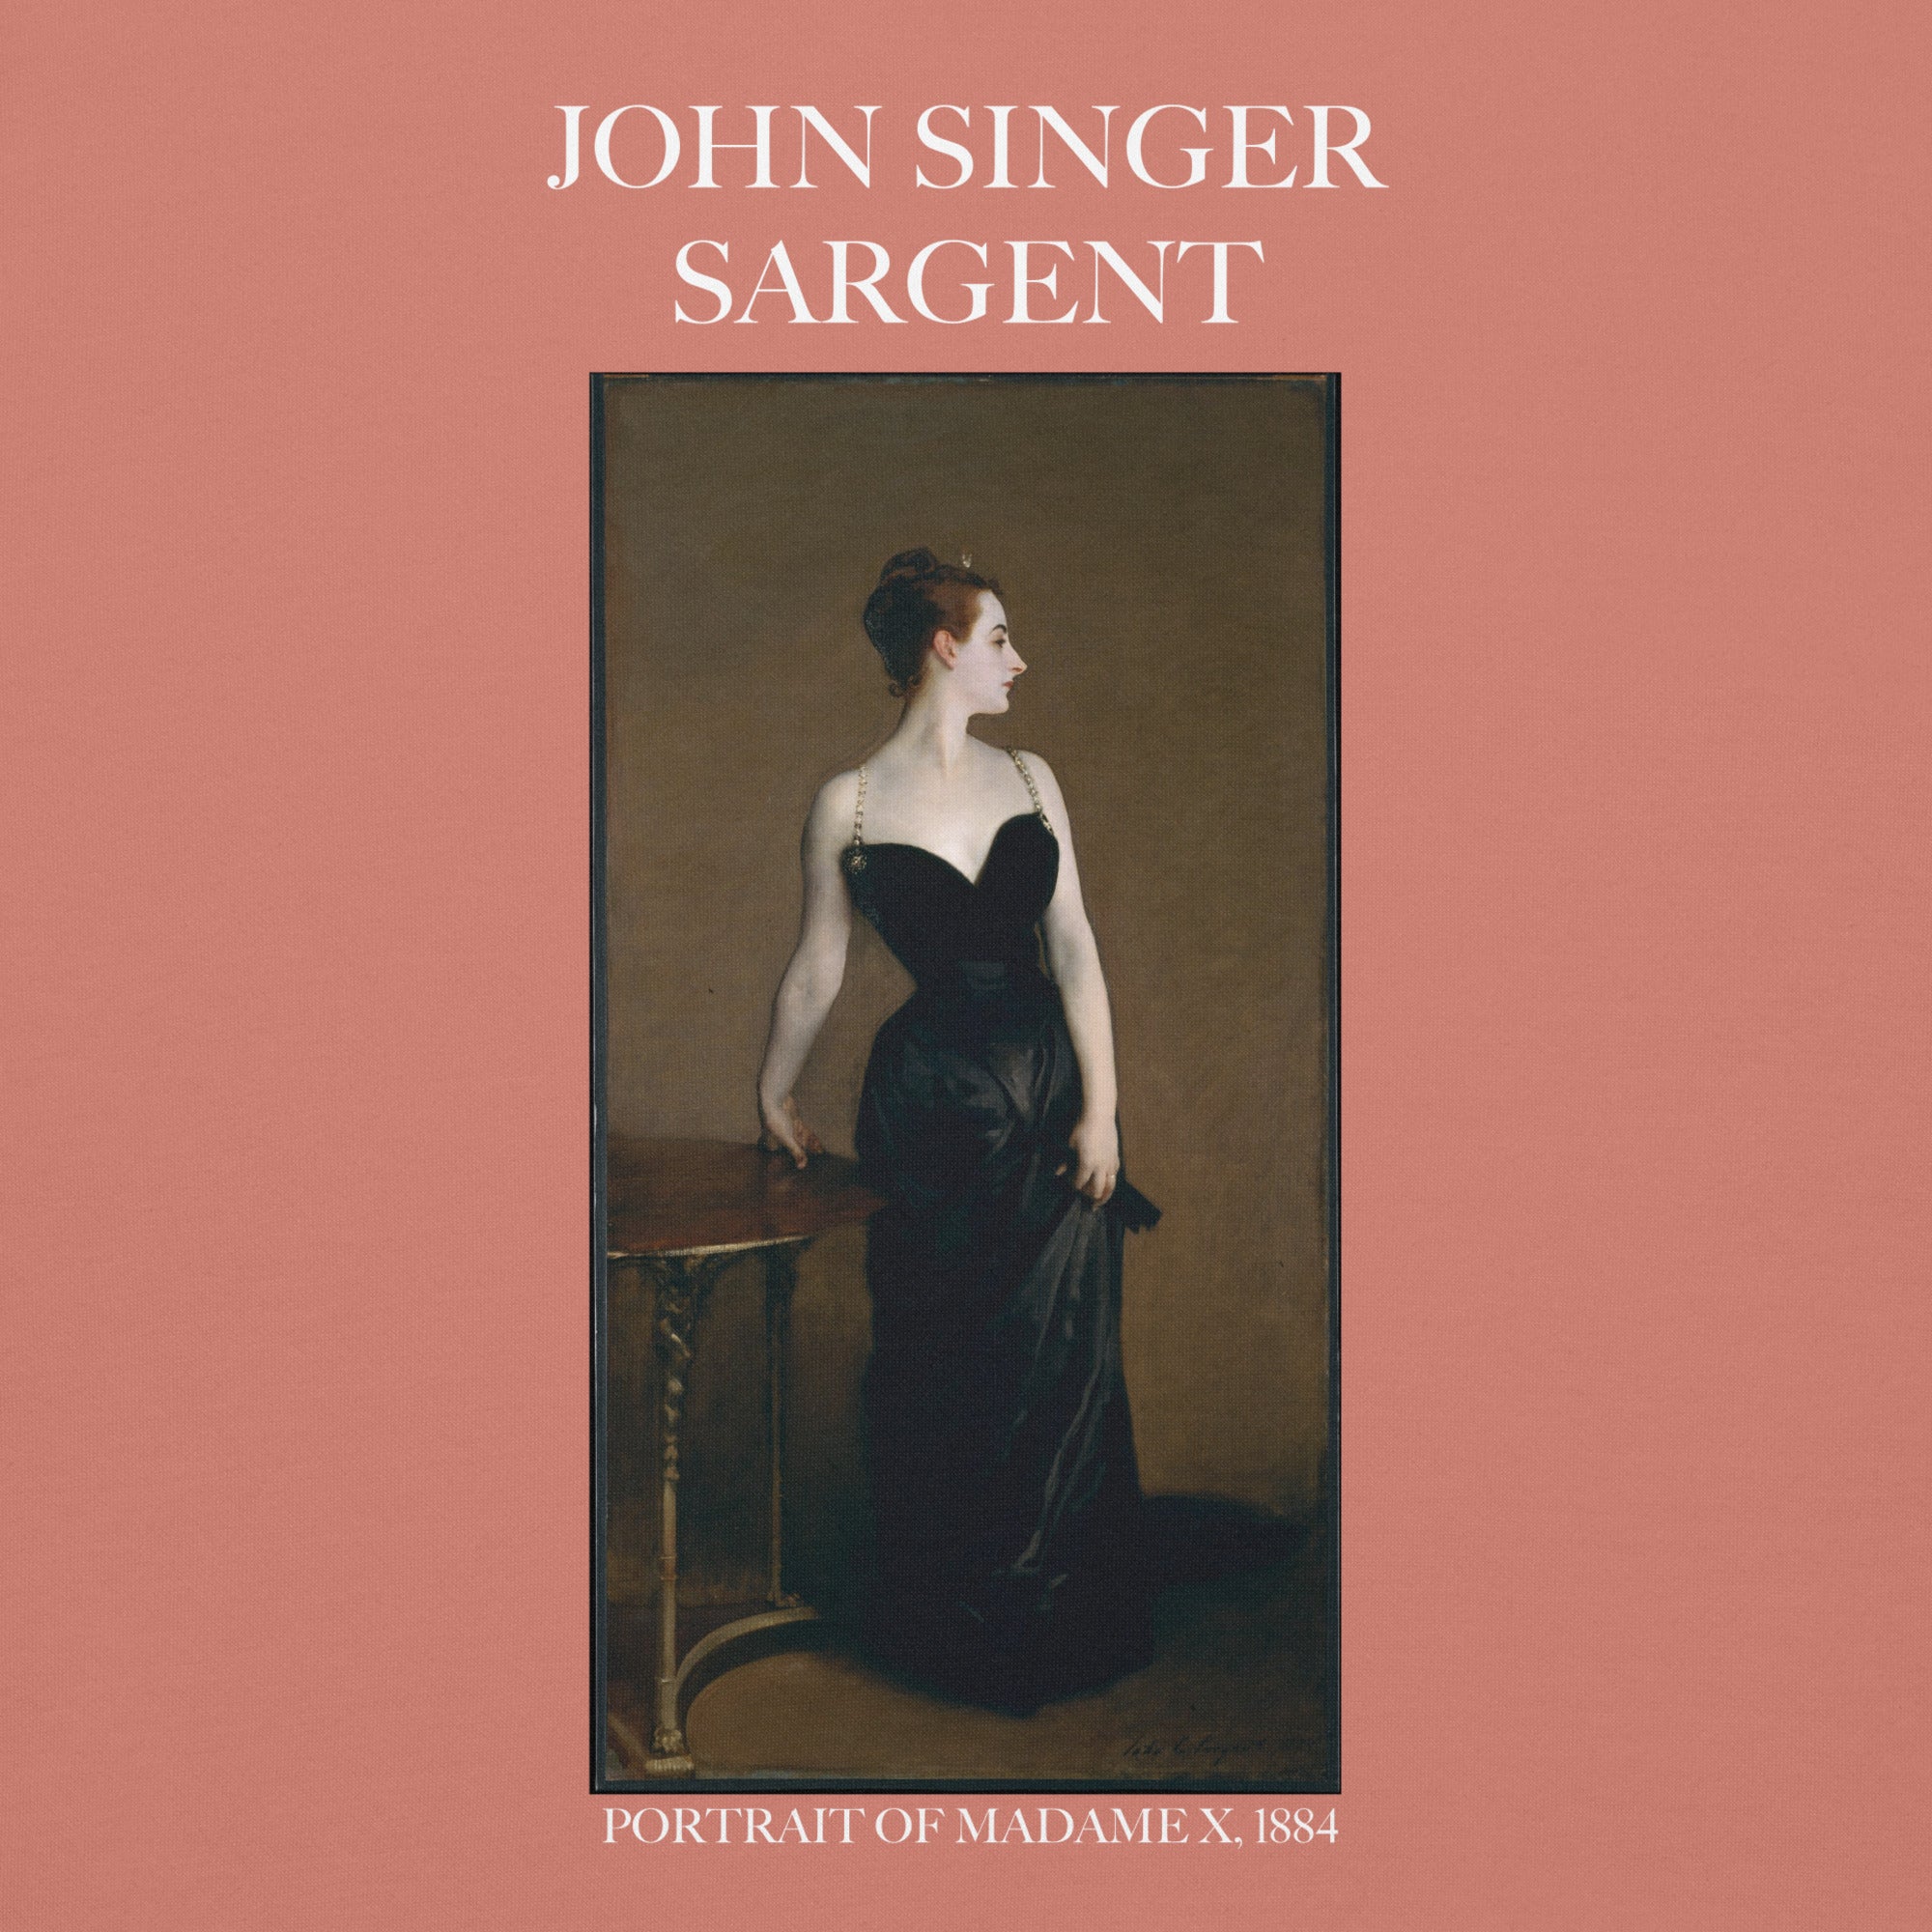 John Singer Sargent 'Portrait of Madame X' Famous Painting Hoodie | Unisex Premium Art Hoodie